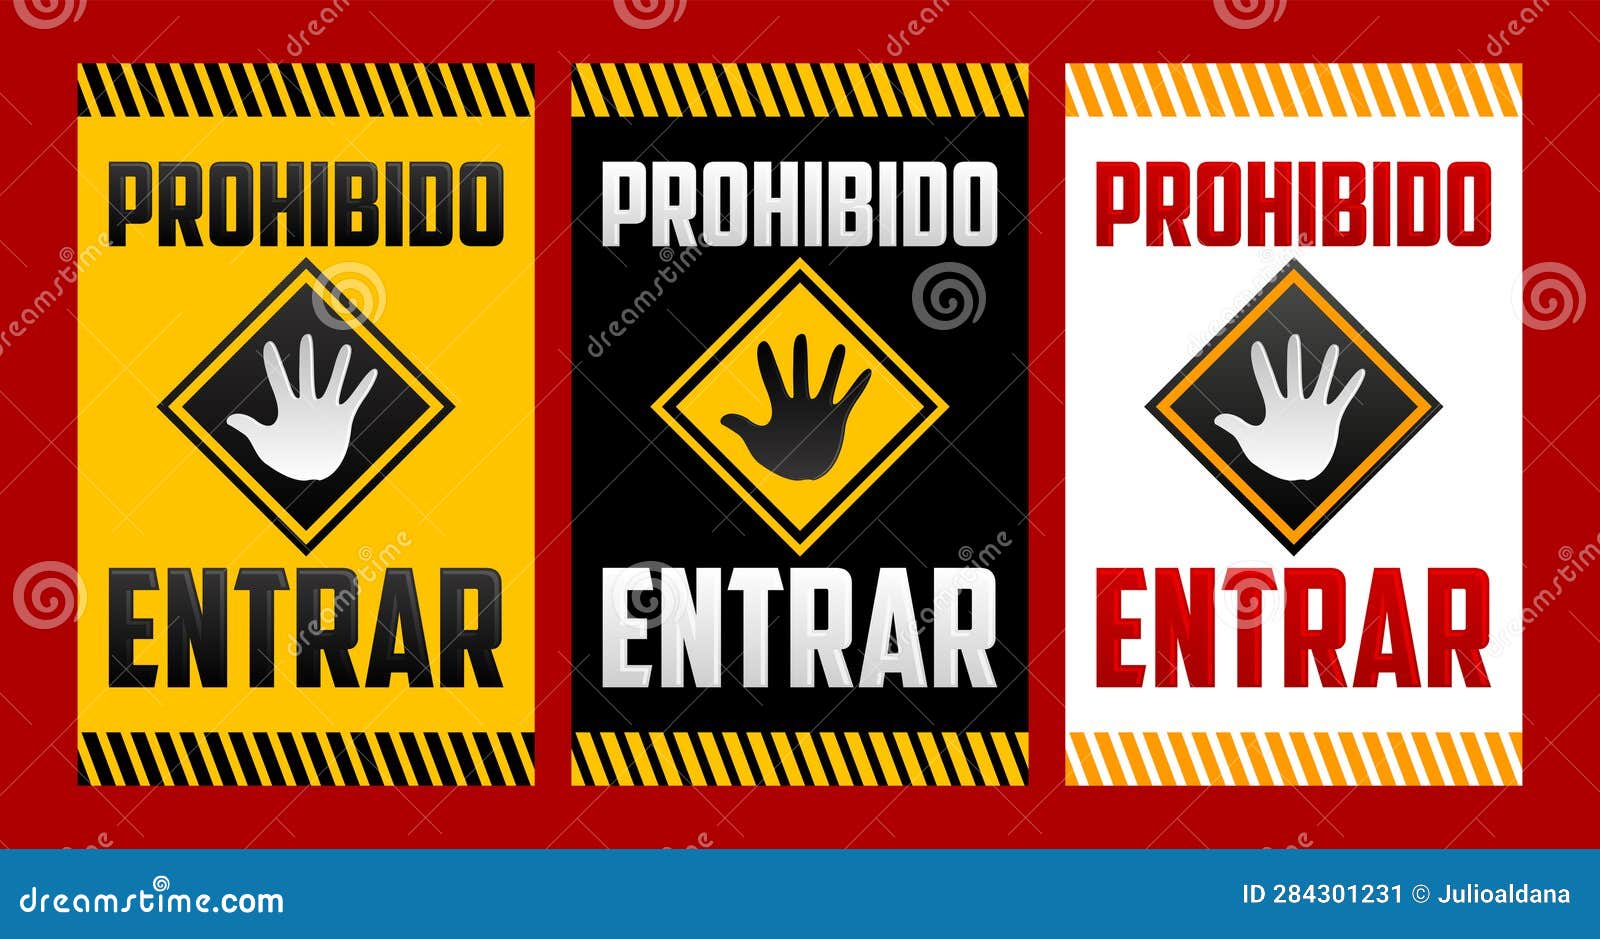 prohibido entrar, entrance prohibited, do not enter spanish text warning sign set